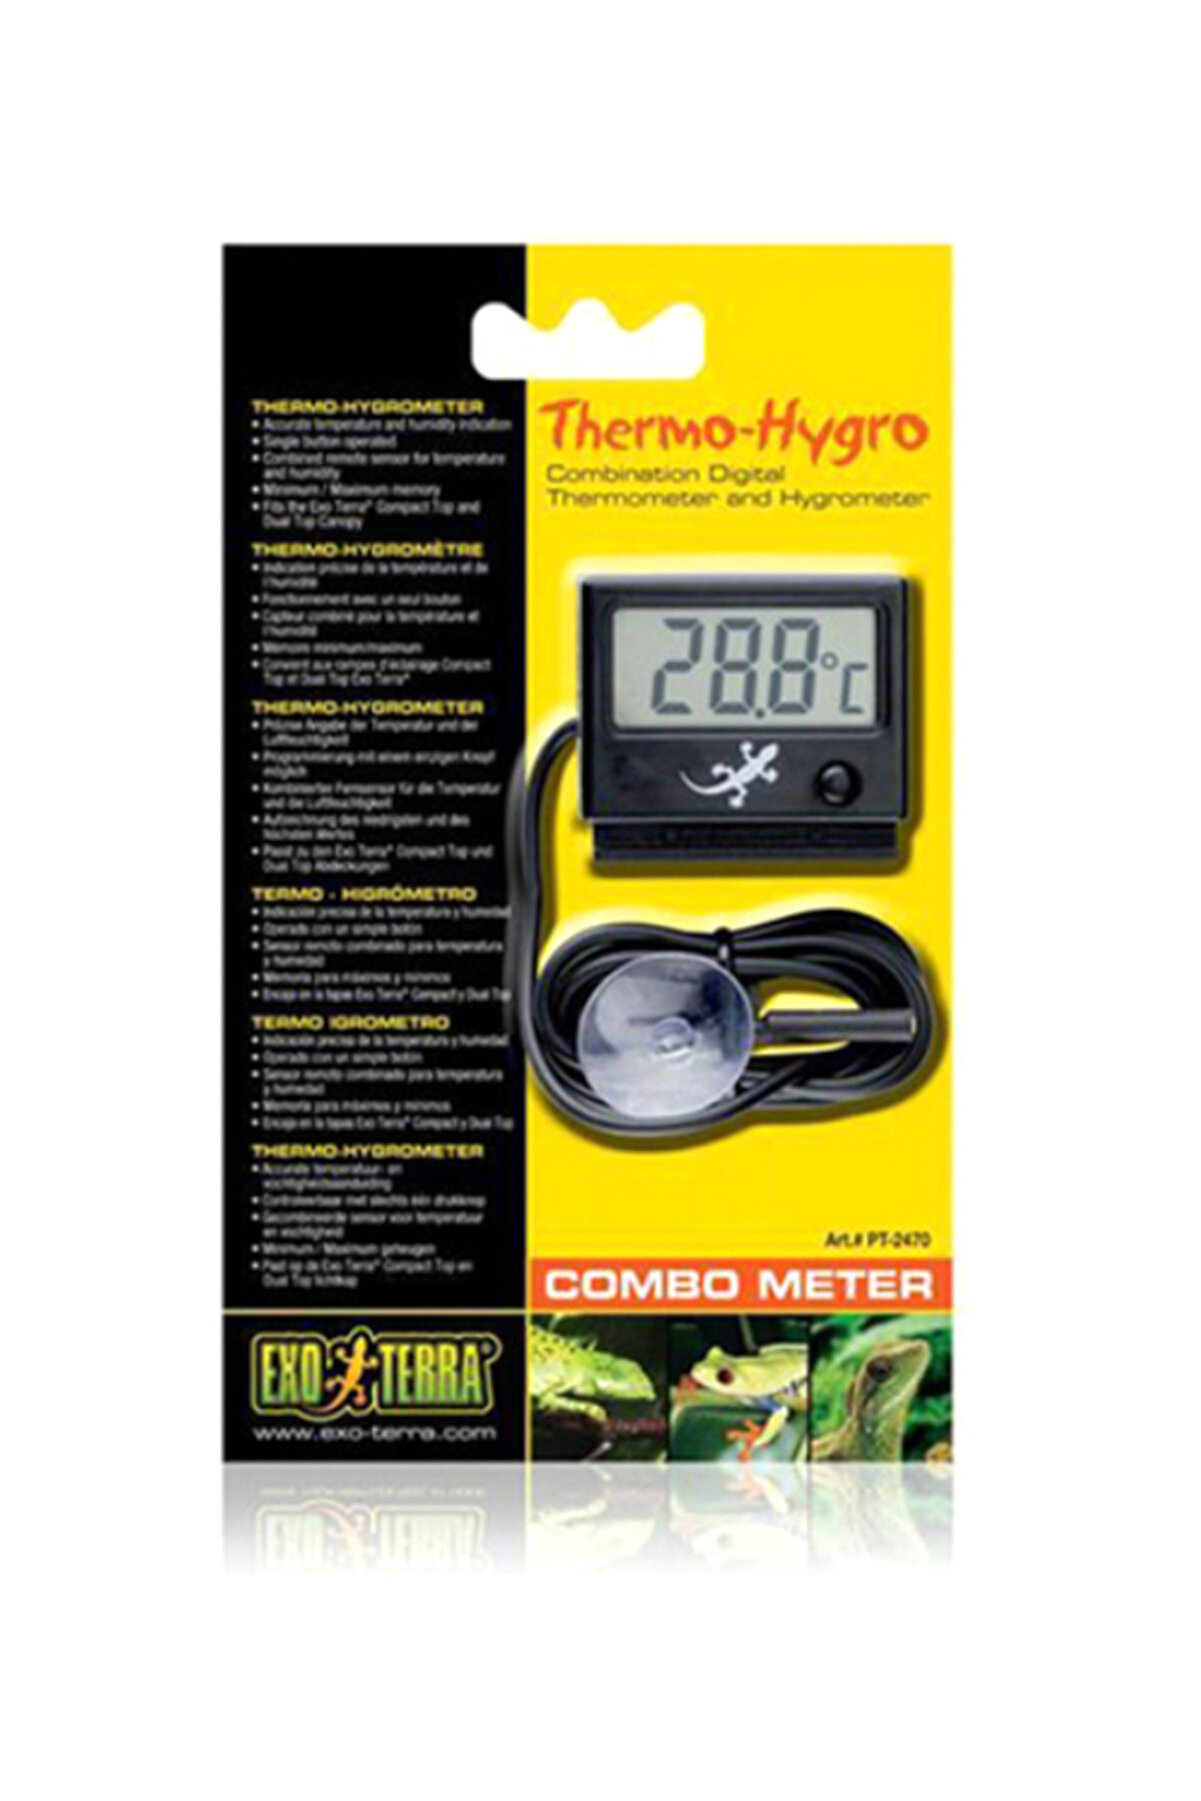 Exo Terra Thermo-Hygro Combometer pt2470